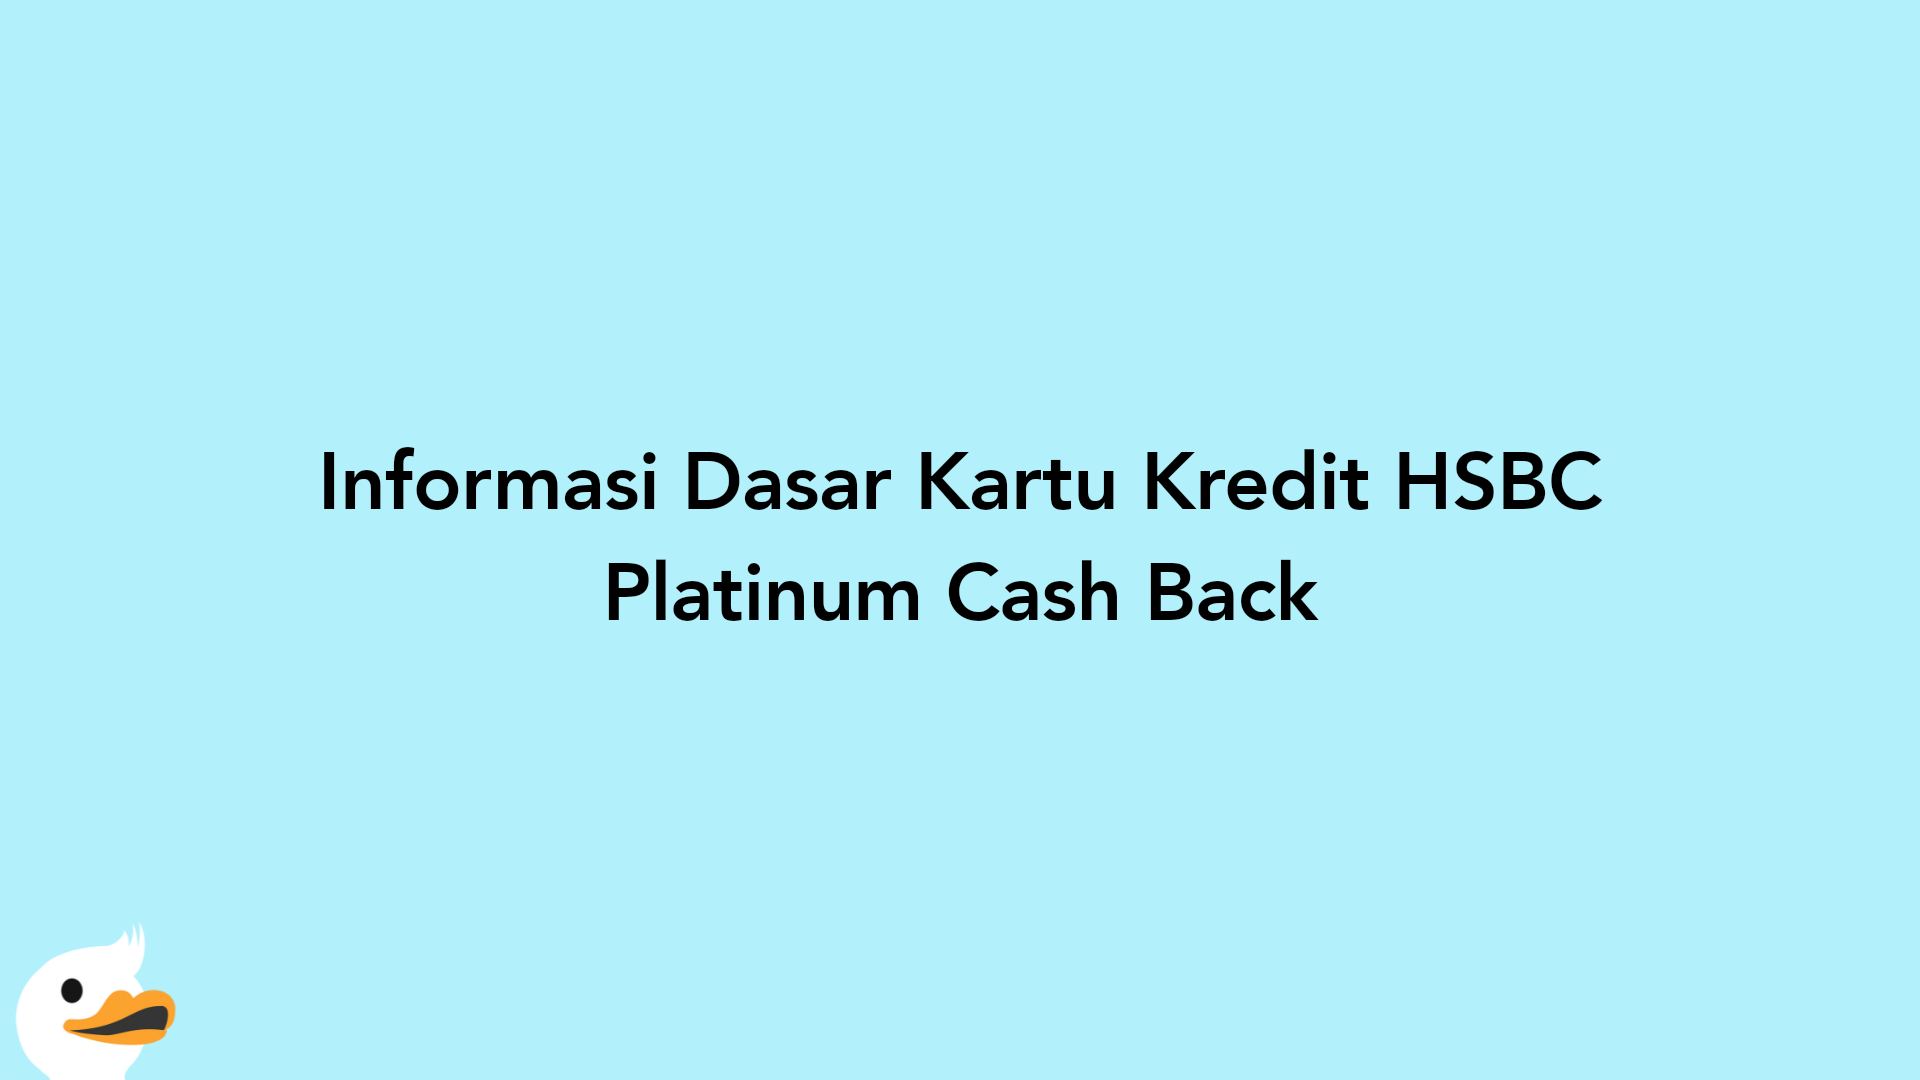 Informasi Dasar Kartu Kredit HSBC Platinum Cash Back